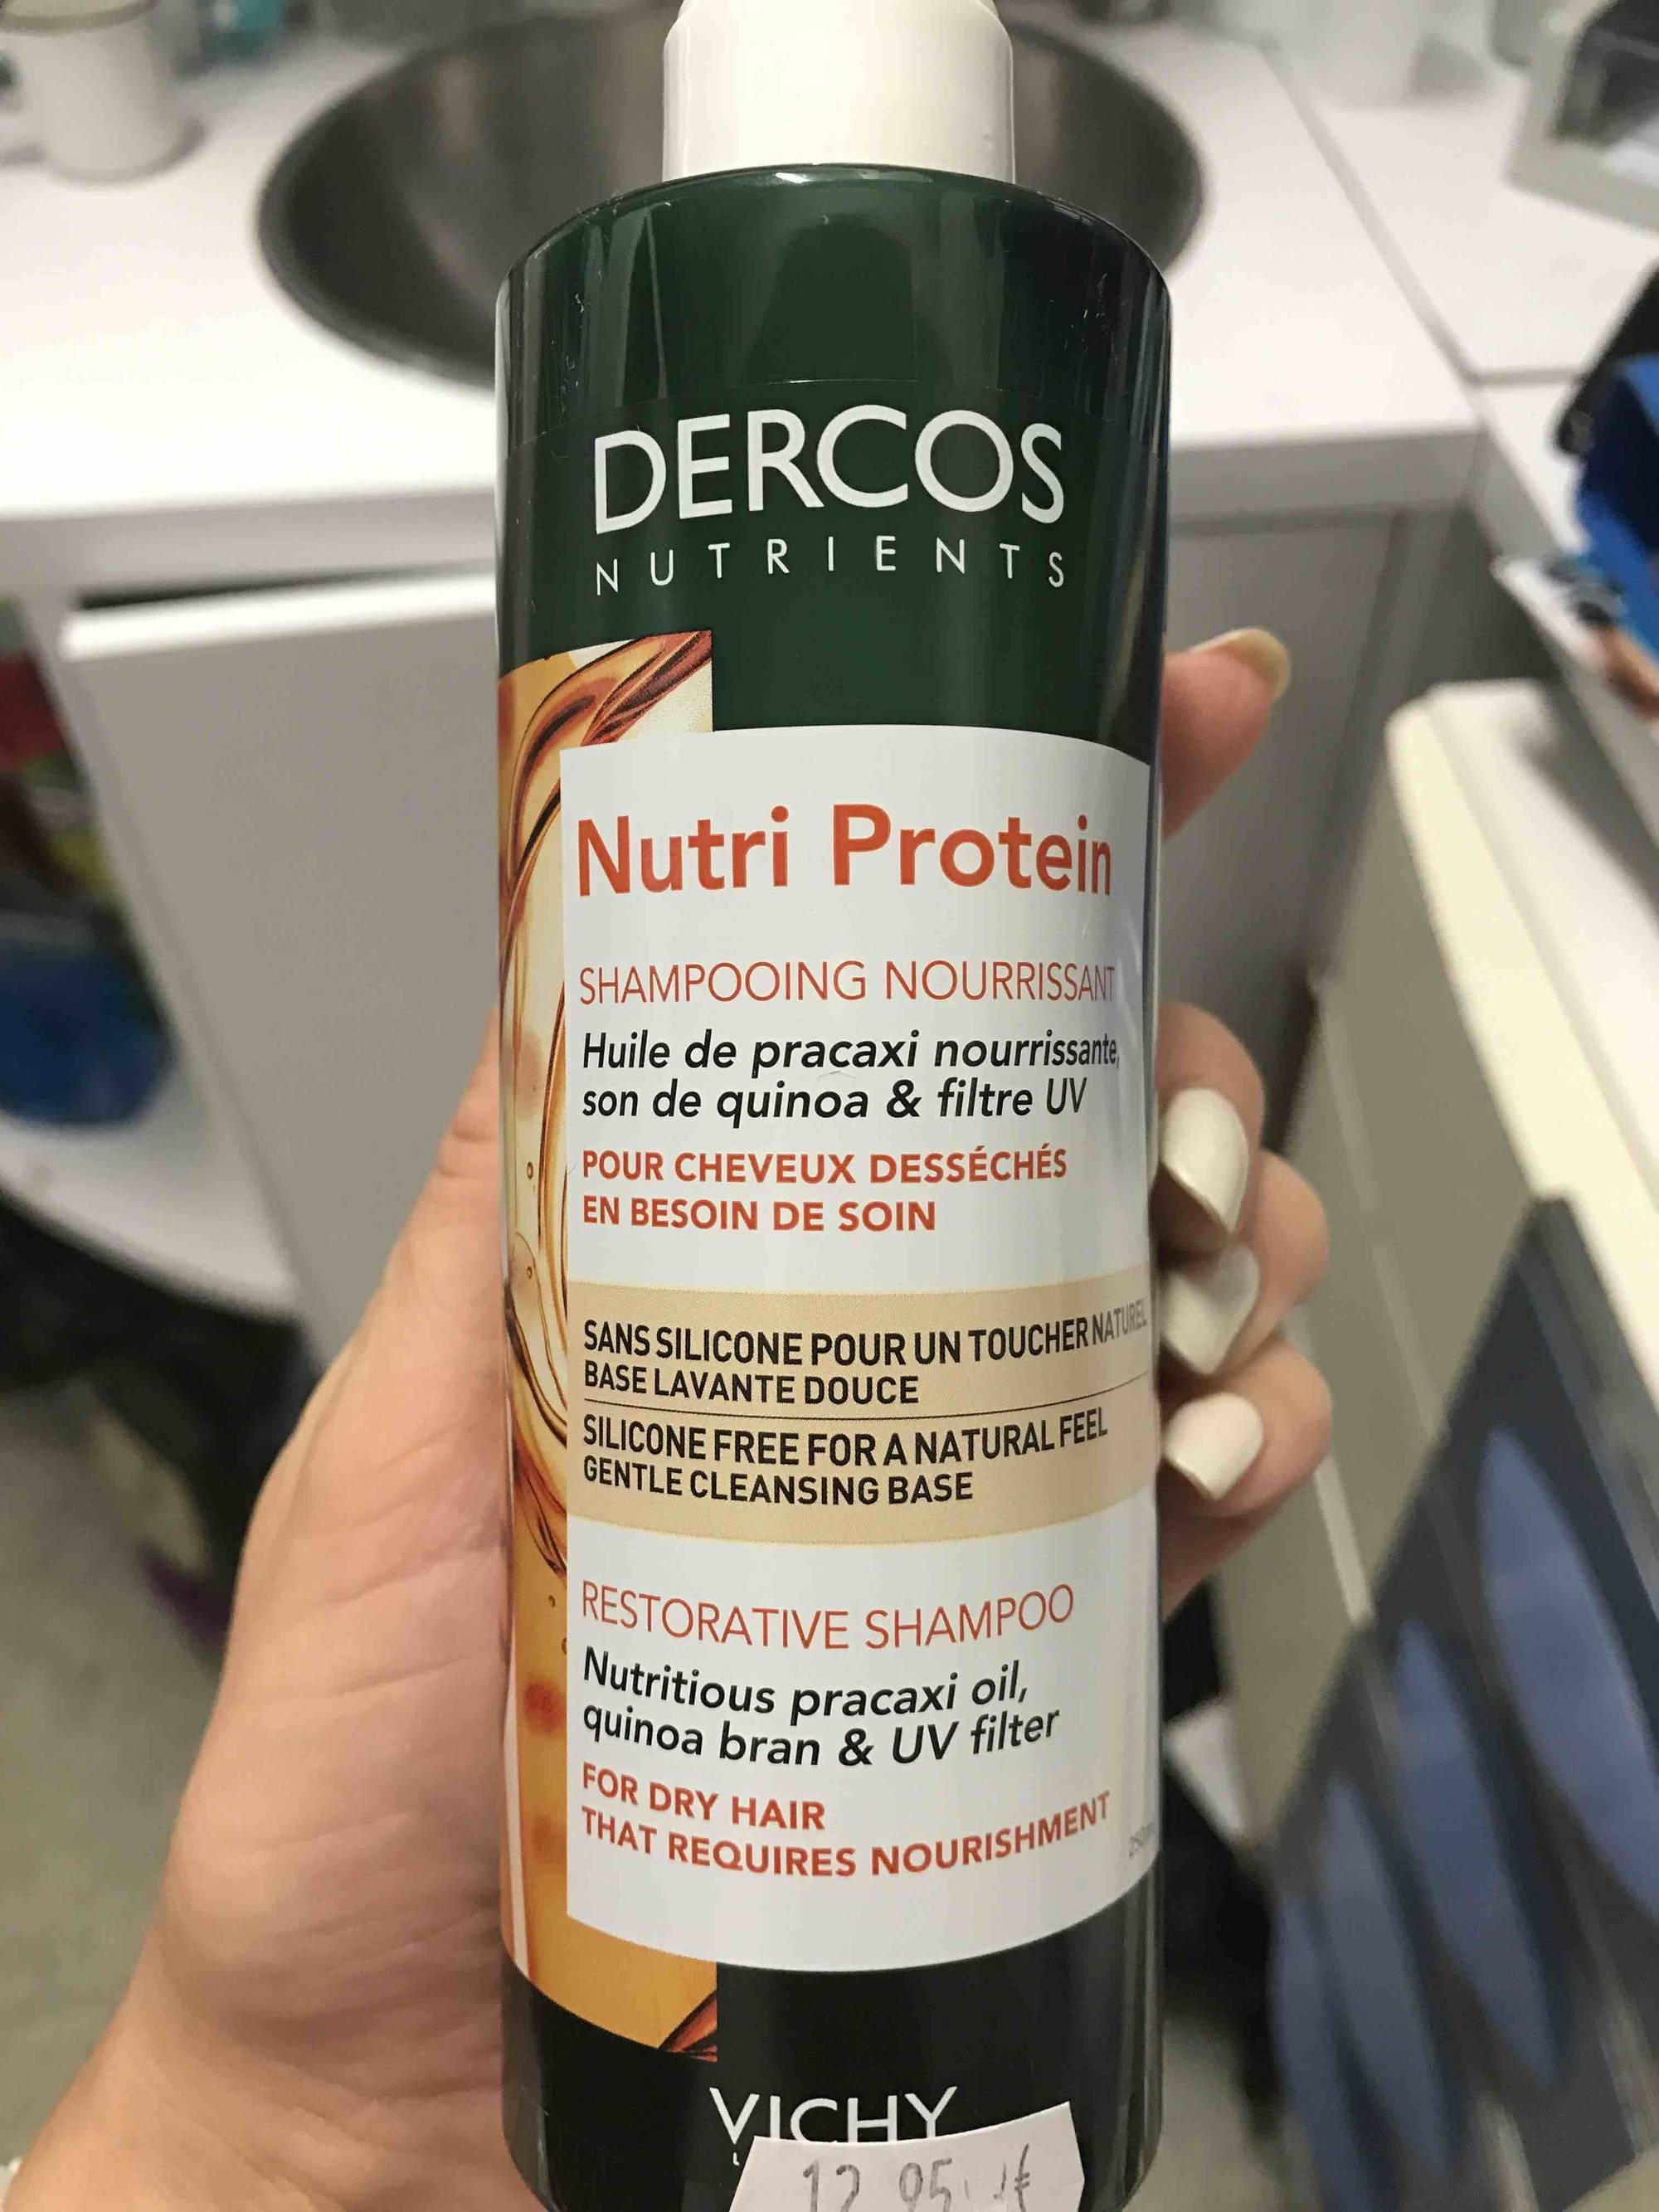 VICHY - Dercos nutri protein - Shampooing nourrissant